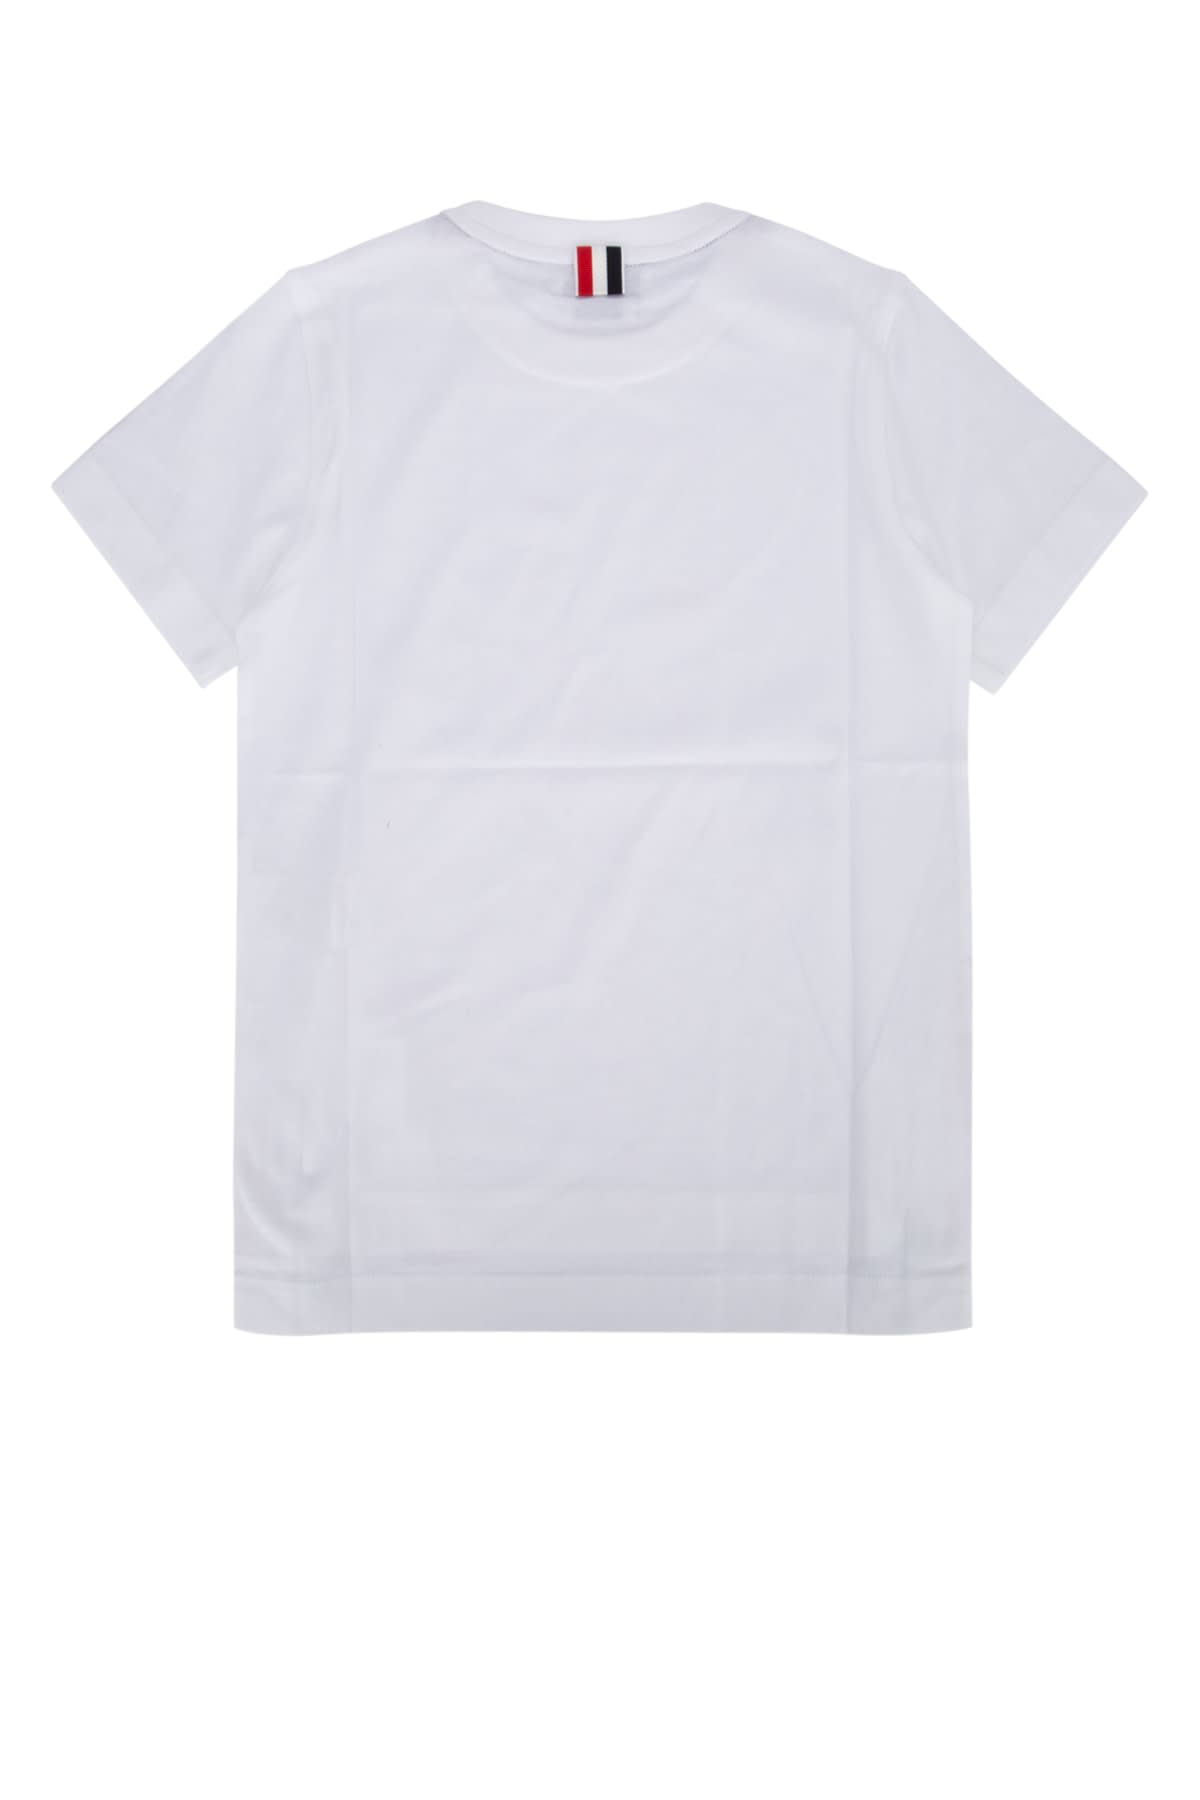 Thom Browne Kids' Tshirt In White